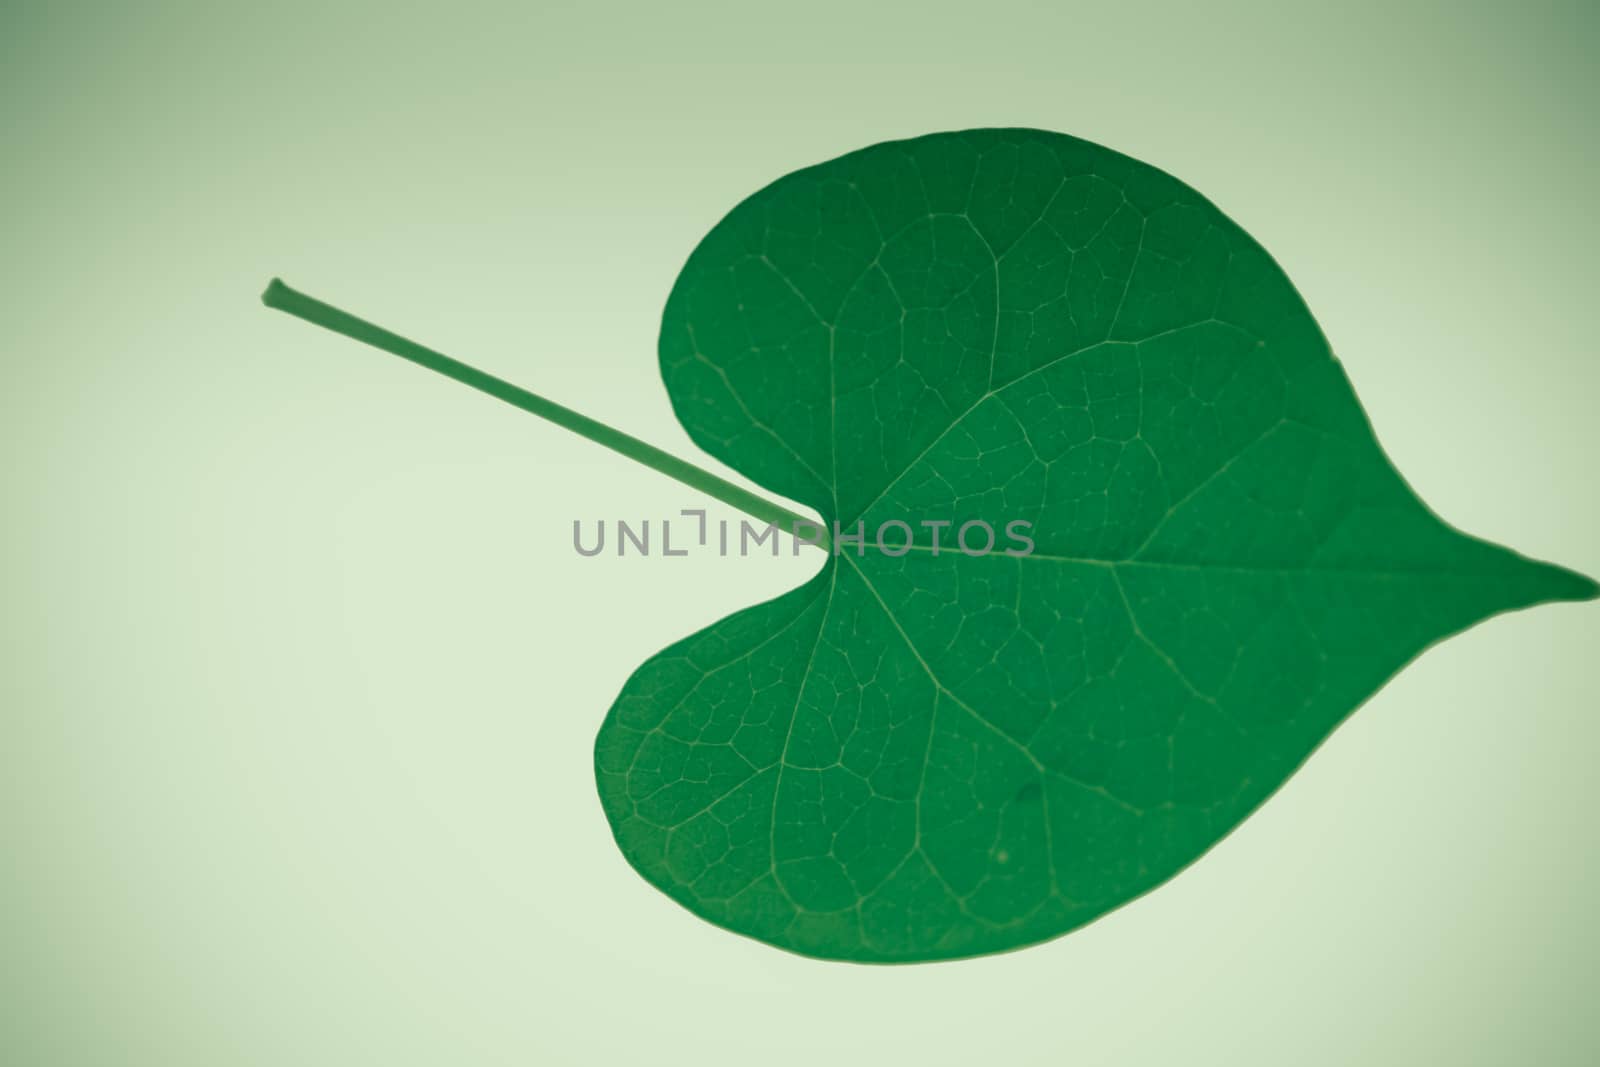 leaf of Ipomoea purpurea (tall morning-glory), Family: Convolvulaceae